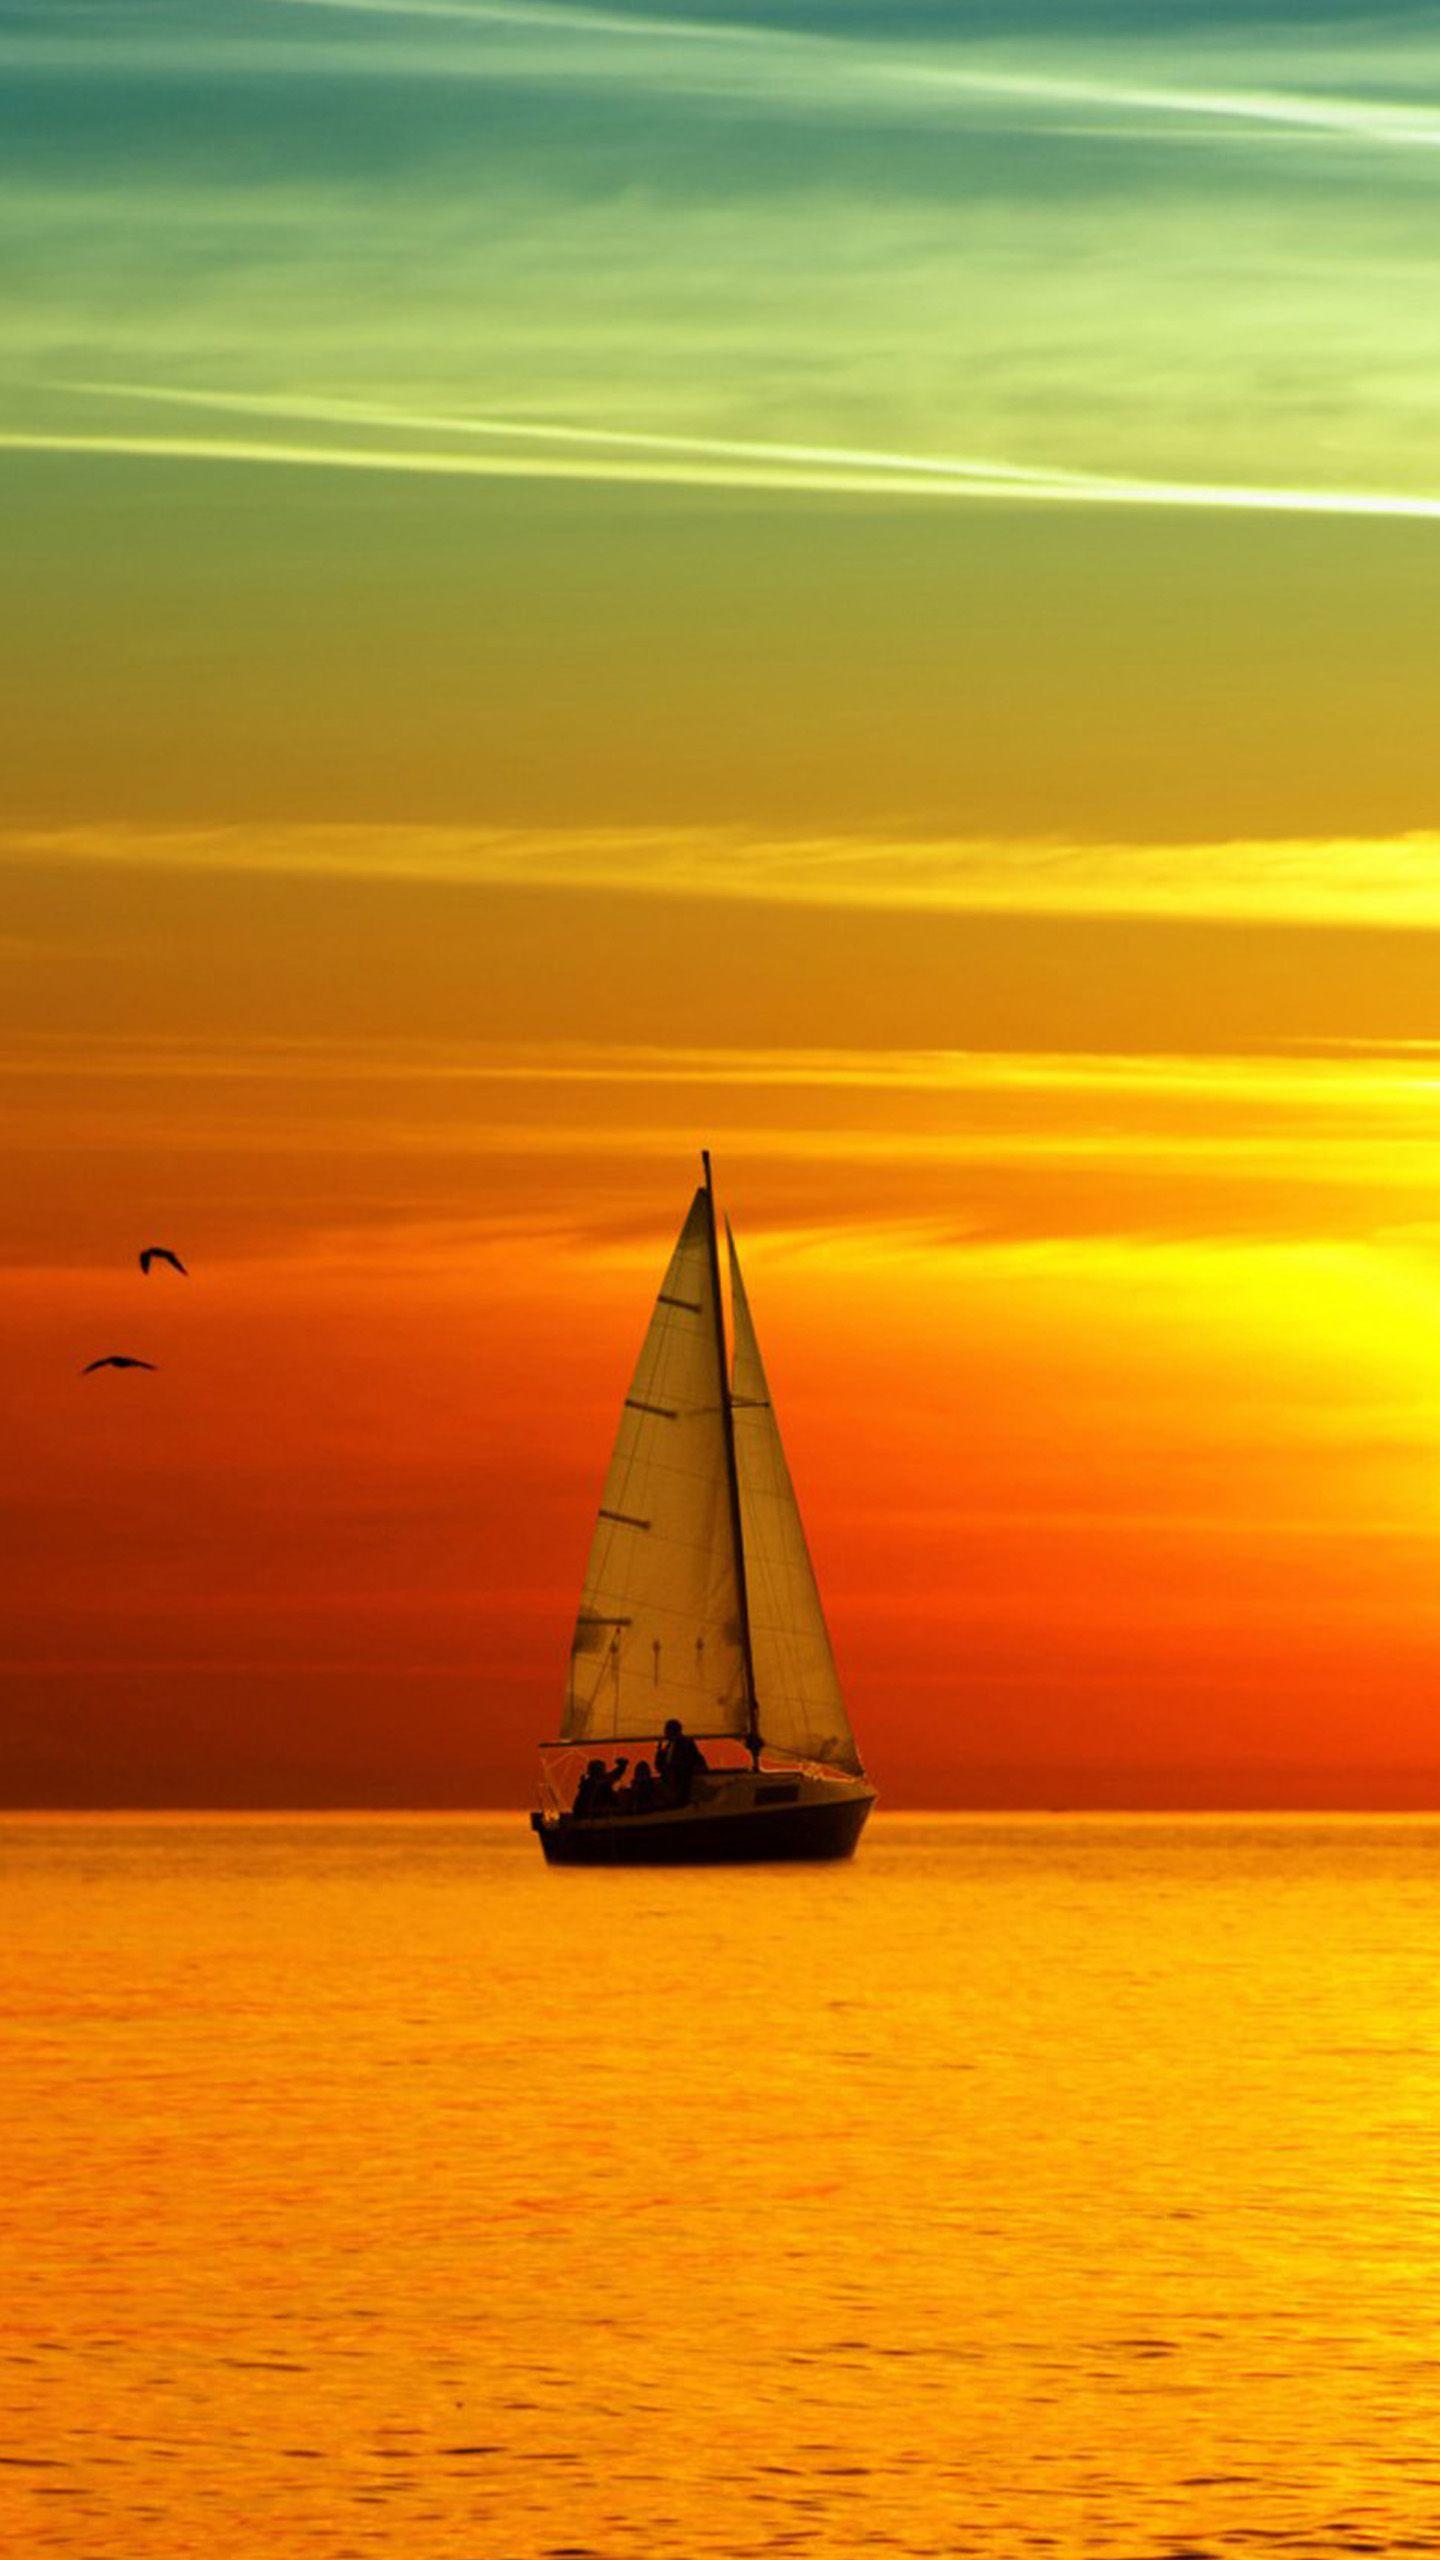 Sunset Sailing 2 Galaxy S6 Wallpaper. Galaxy S6 Wallpaper